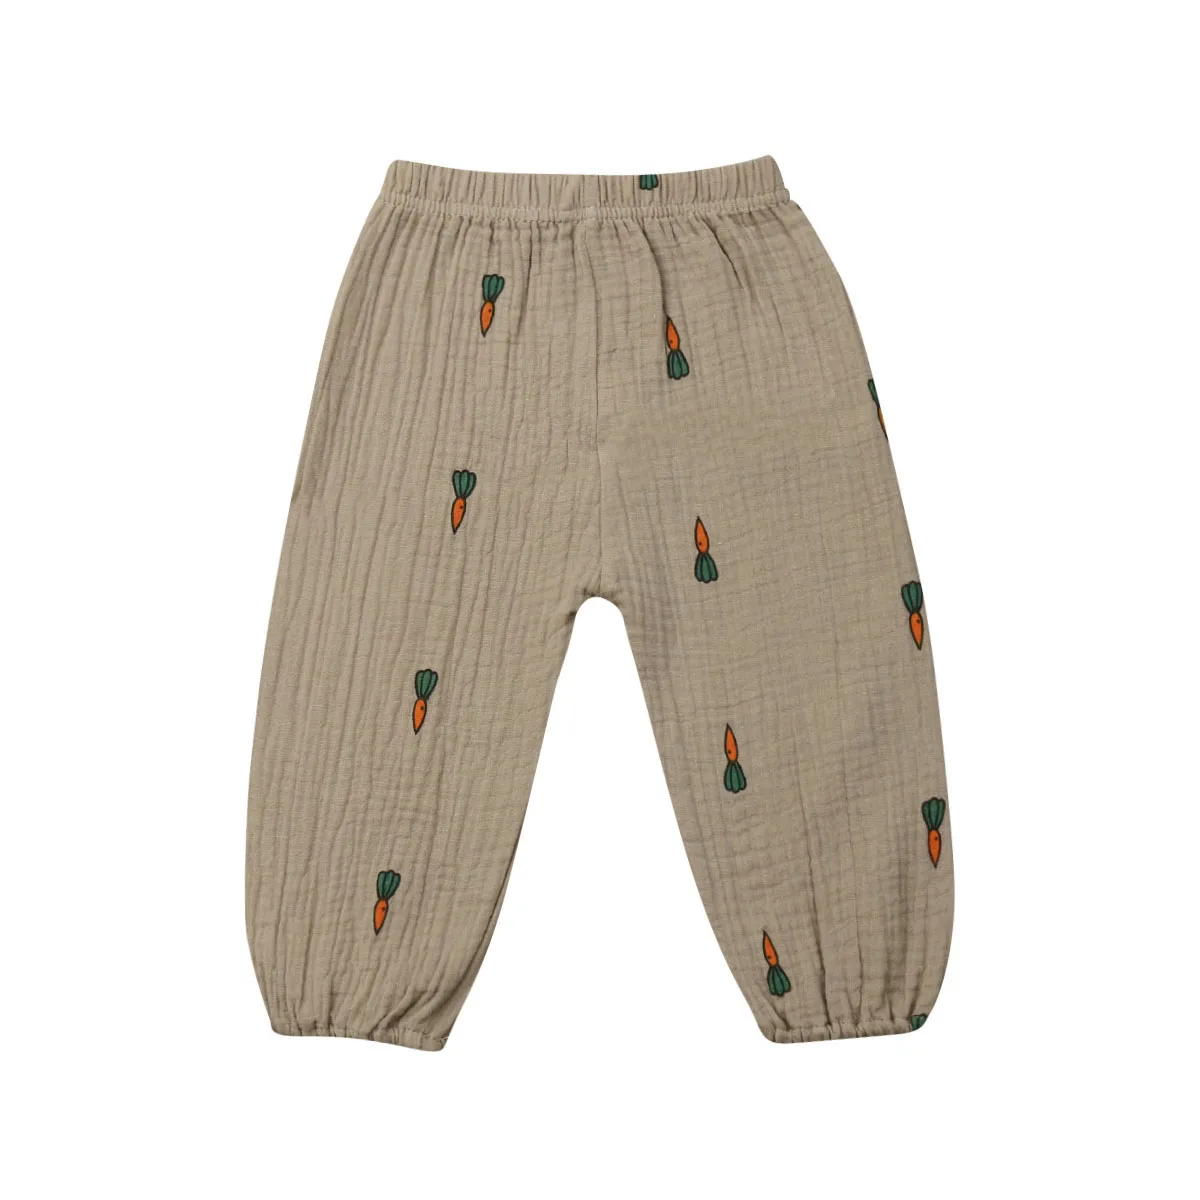 Kids Boys Girls 6M-3T Cotton Casual Trousers Toddler Leggings Harem Pants - Цвет: Хаки